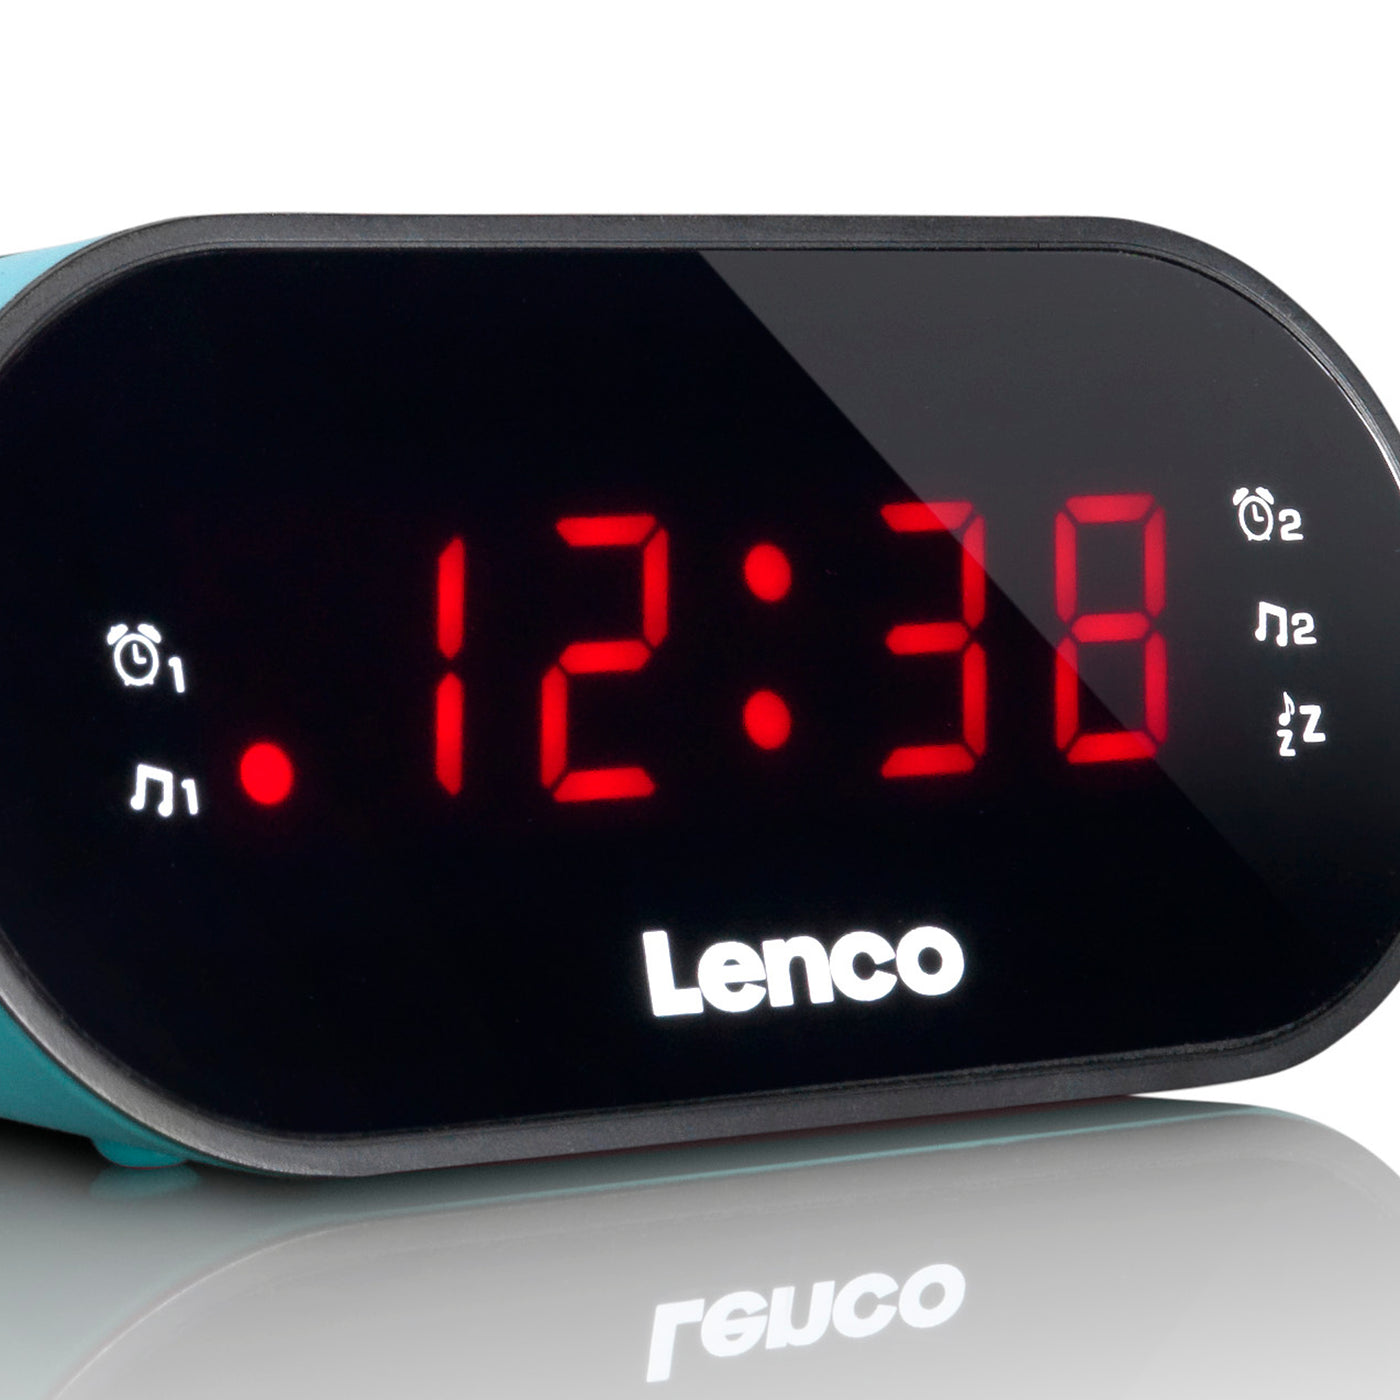 | Jetzt Blue im Shop Webshop Lenco CR-07 offiziellen kaufen? - Offizieller – Lenco Lenco.de